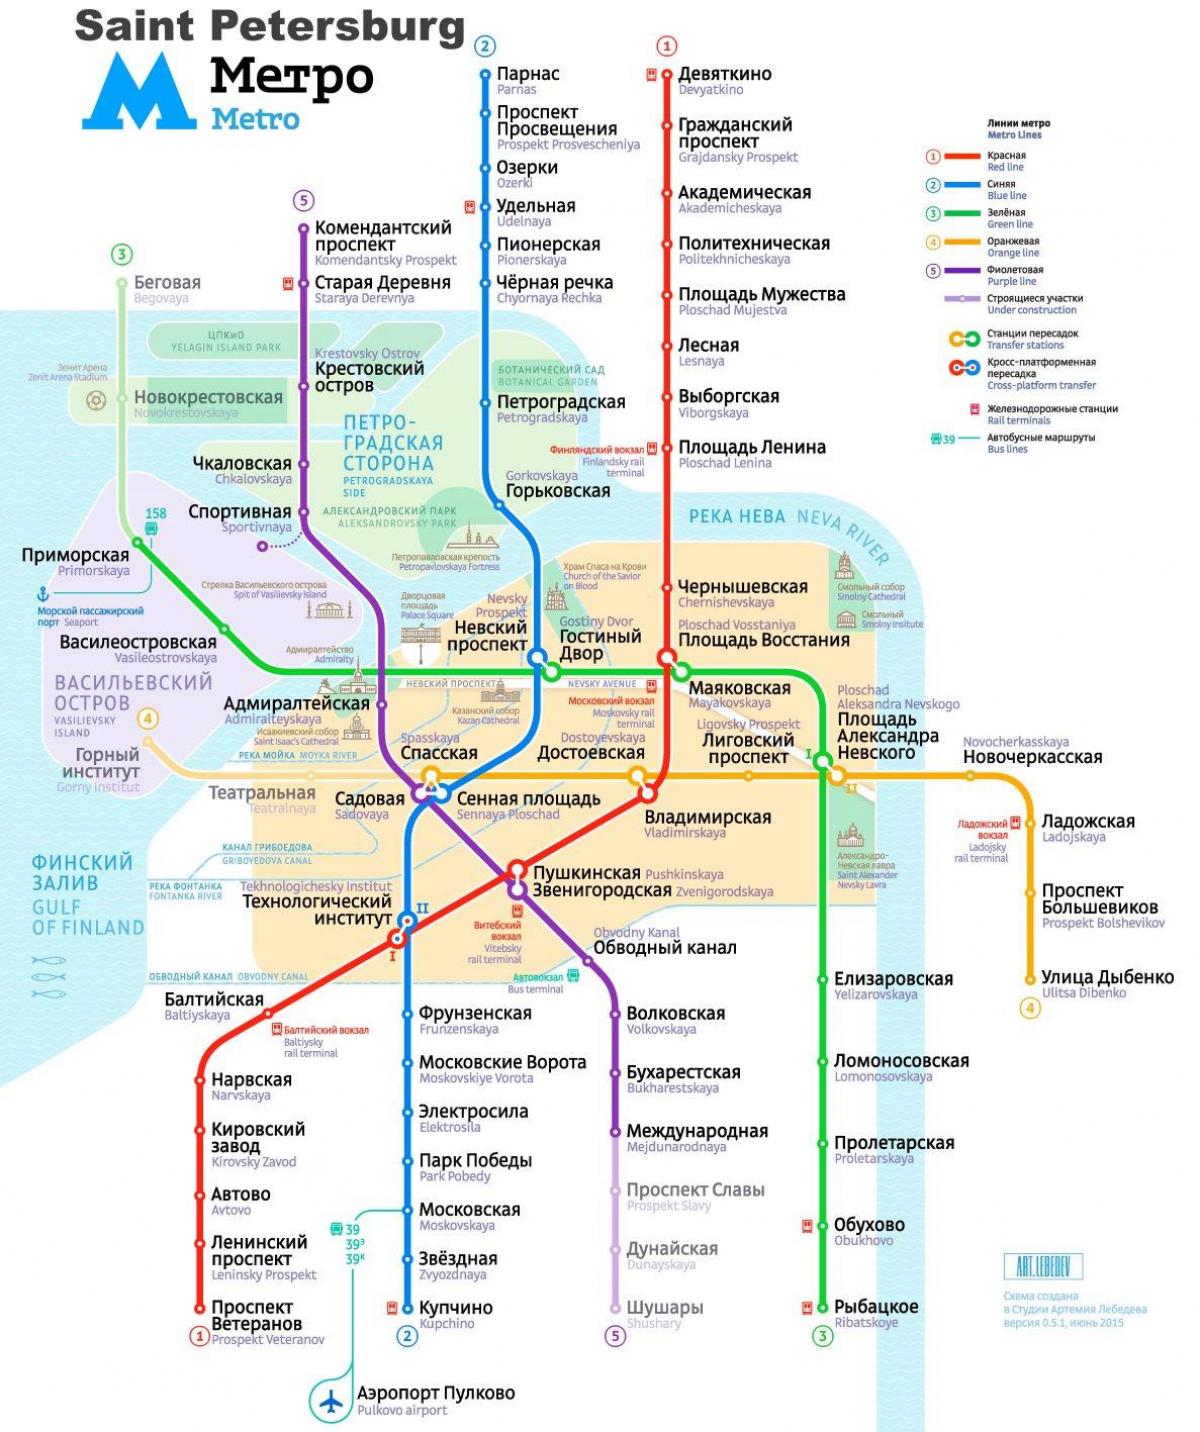 St Petersburg subway station map